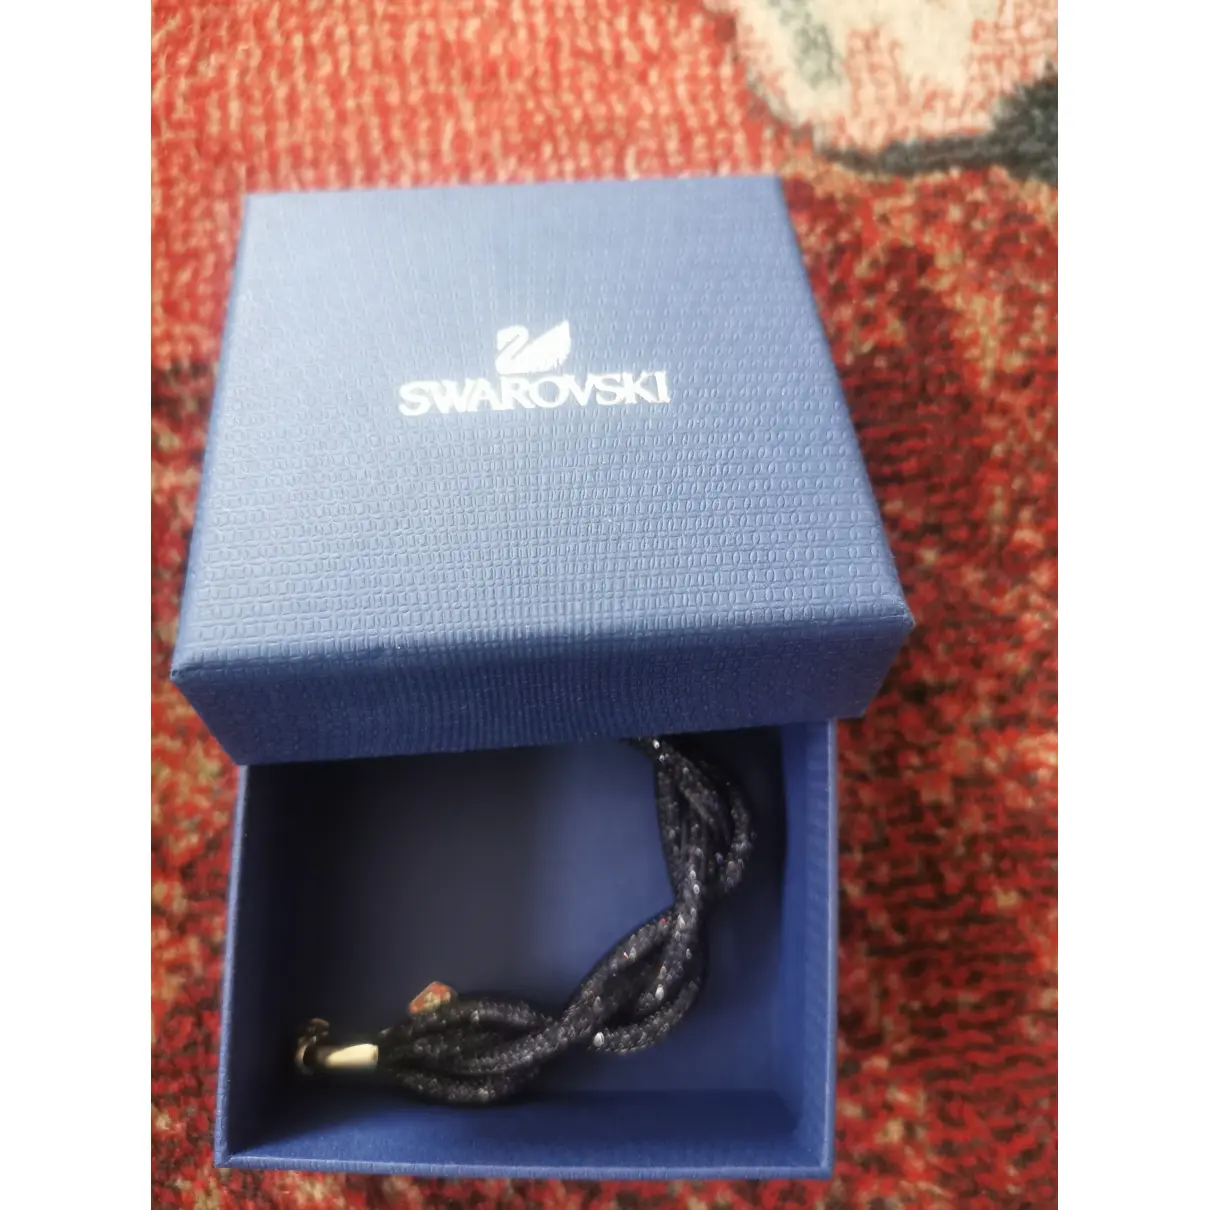 Buy Swarovski Stardust bracelet online